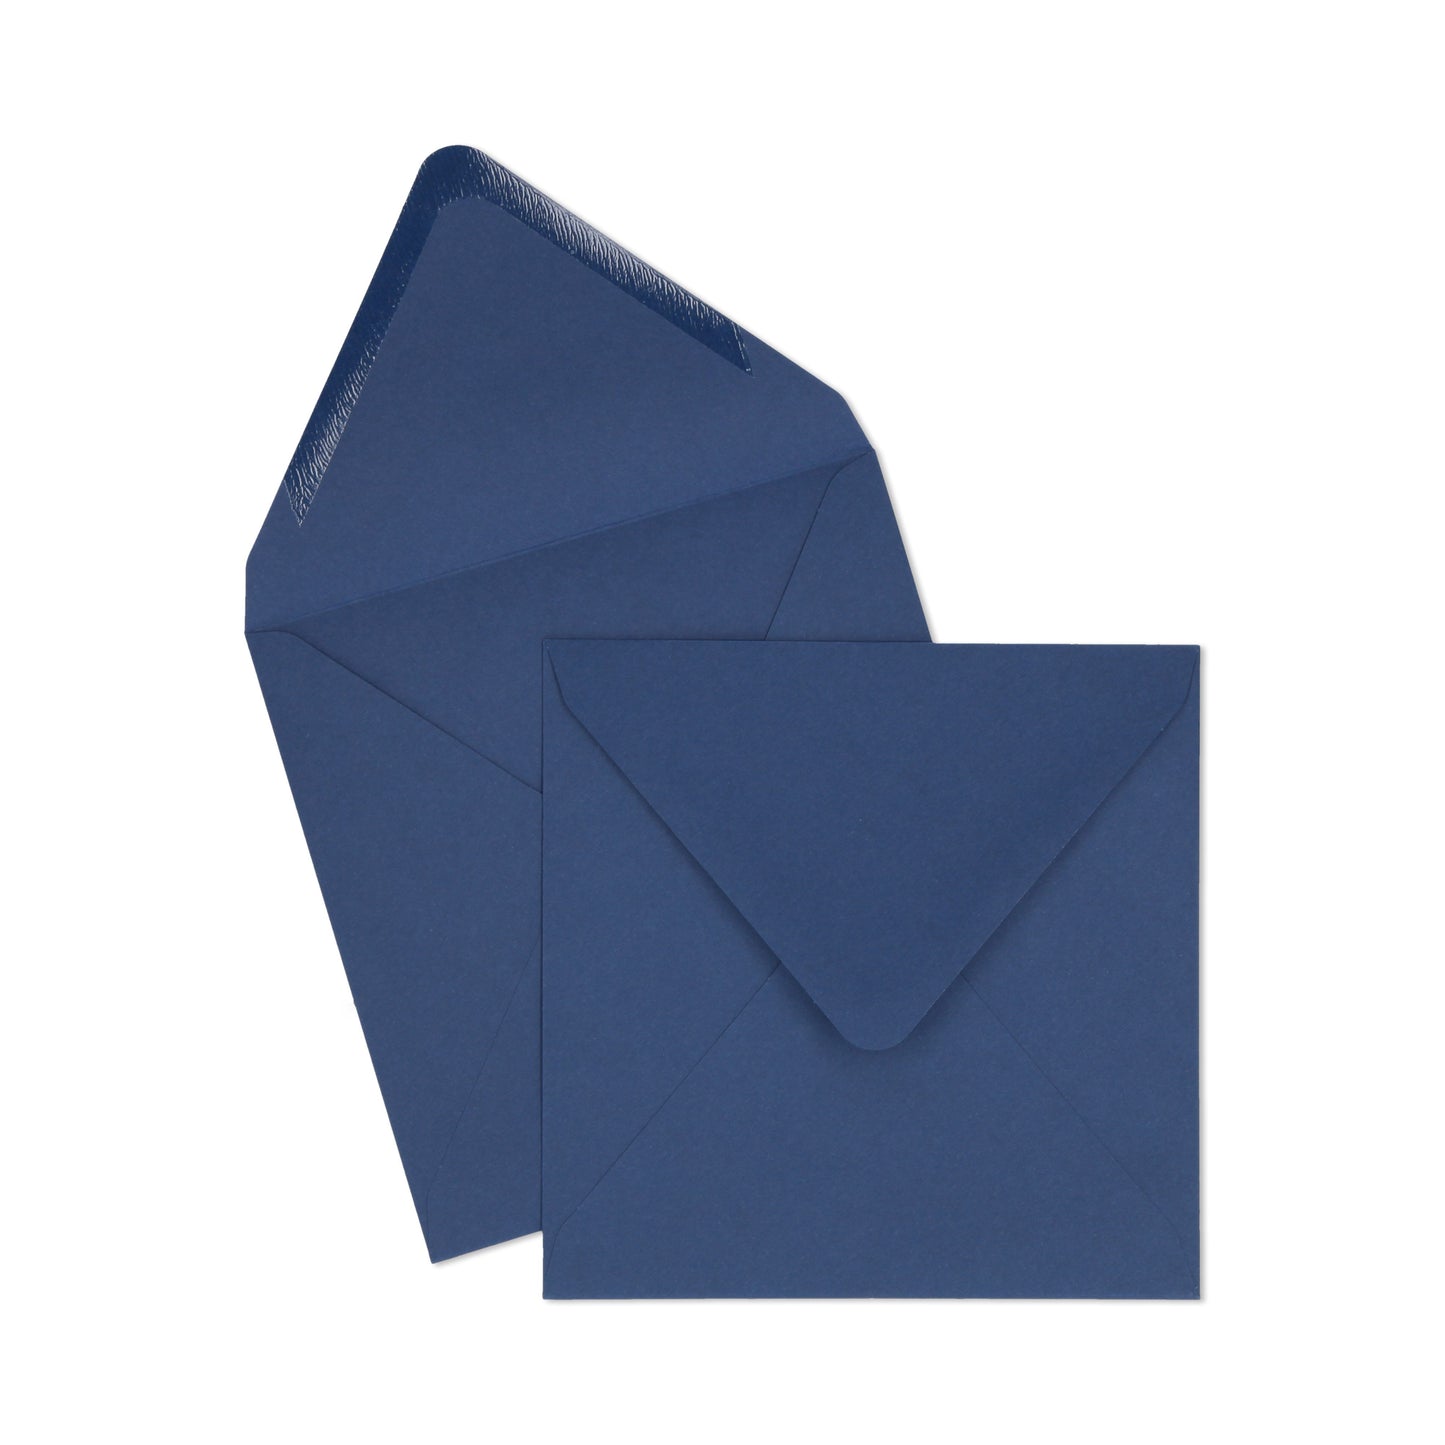 Navy Blue CD Envelope - 10 units